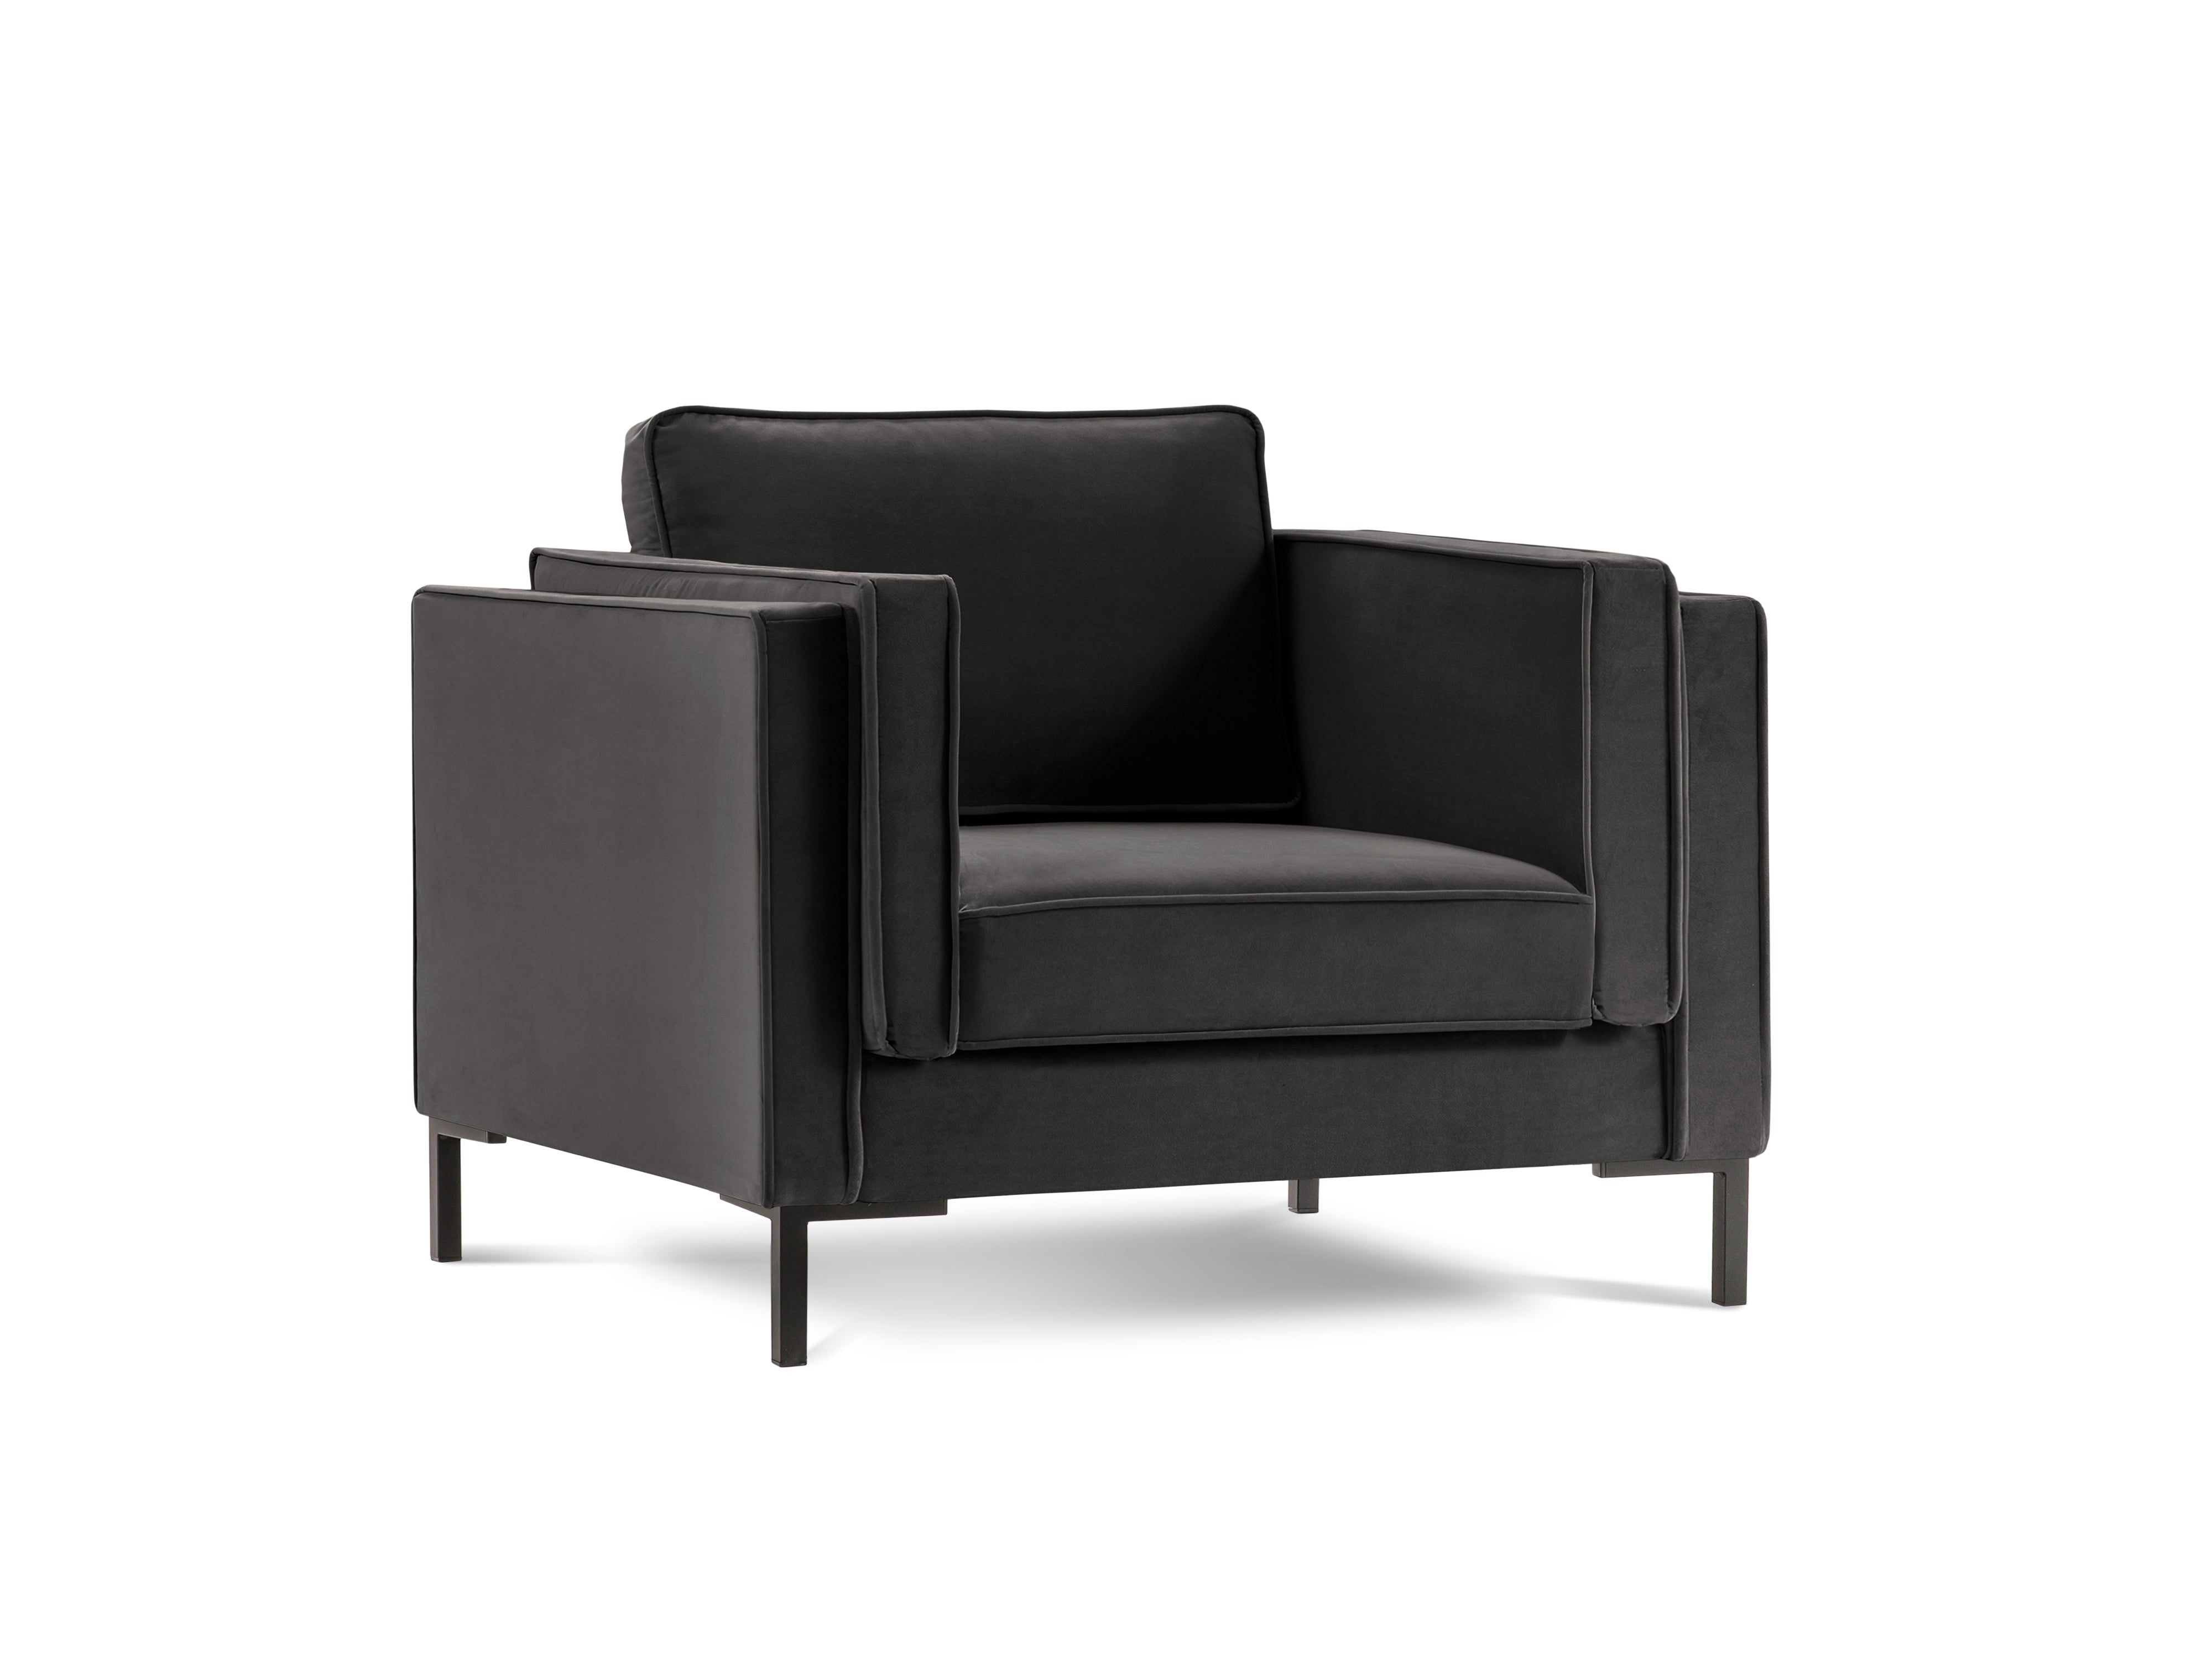 LUIS dark grey velvet armchair with black base